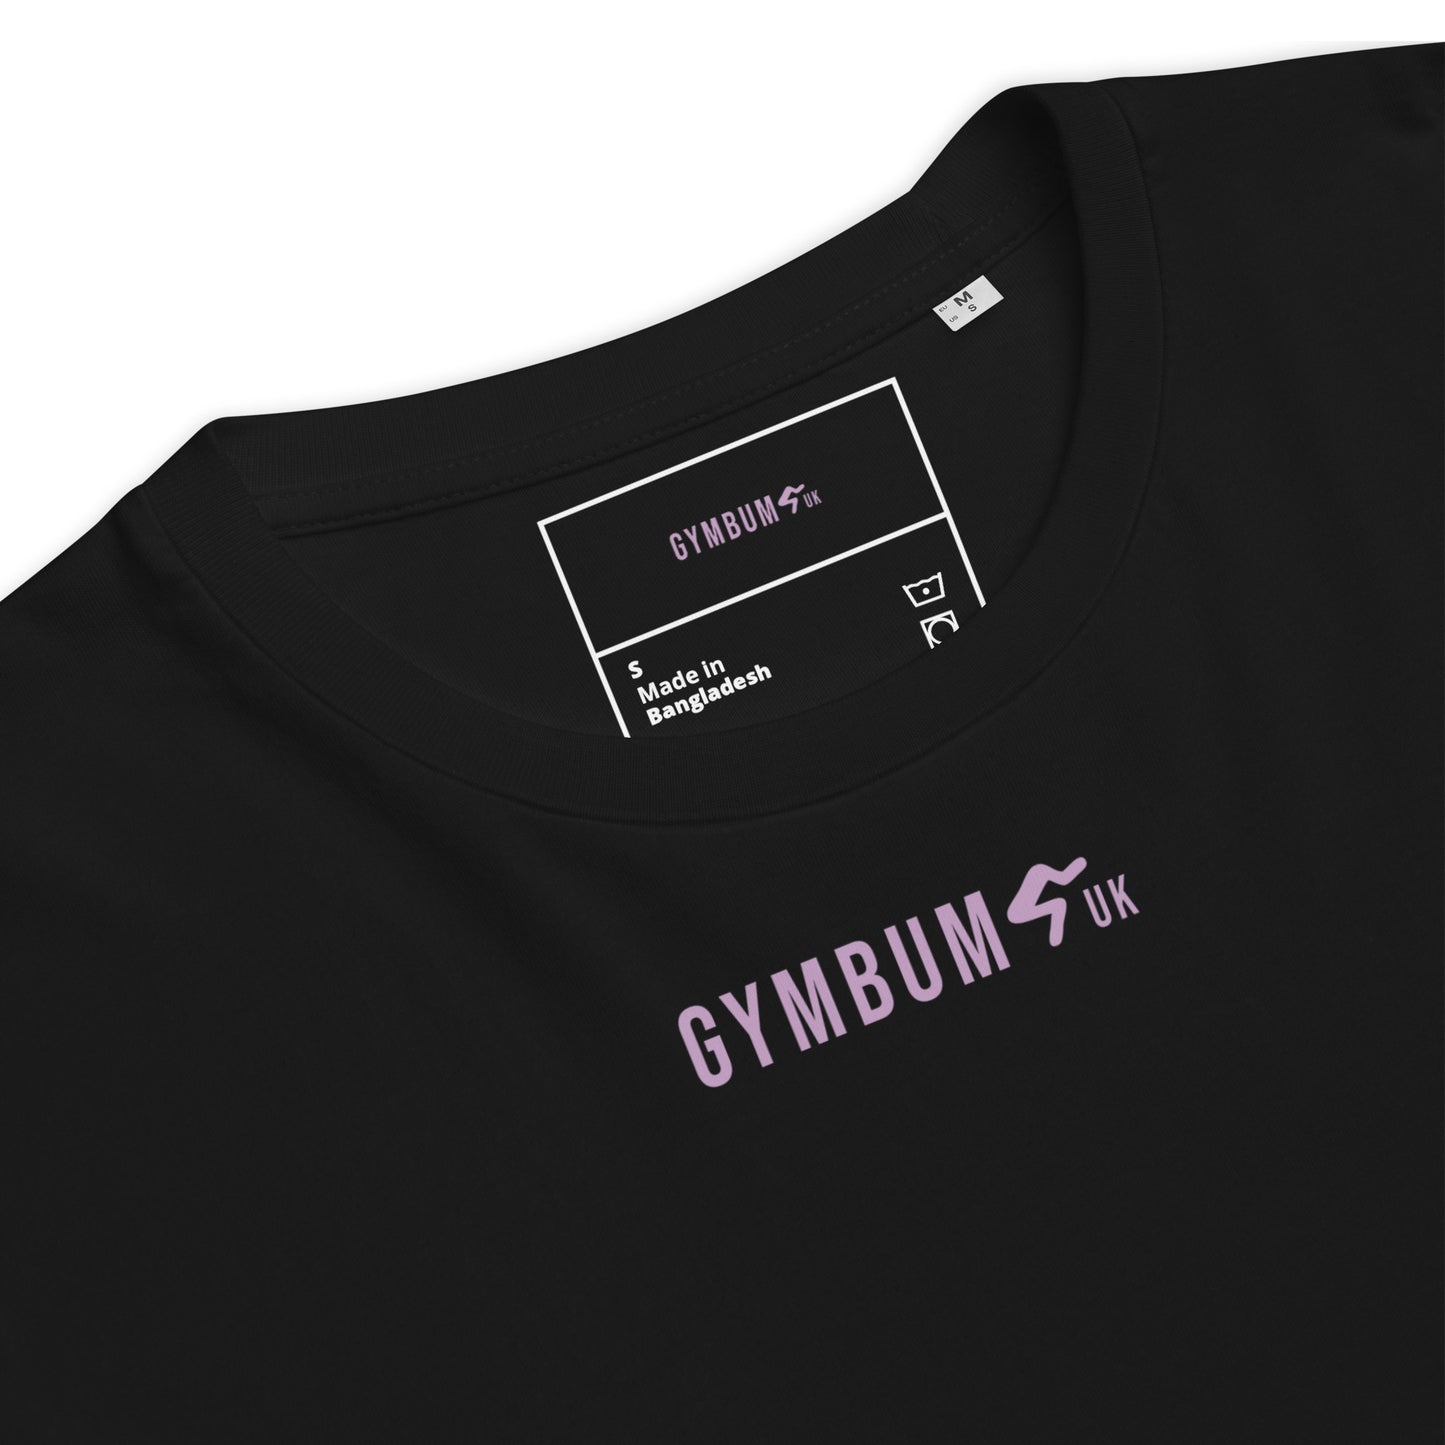 The GymbumUK Lilac Long Logo Organic Cotton T-shirt